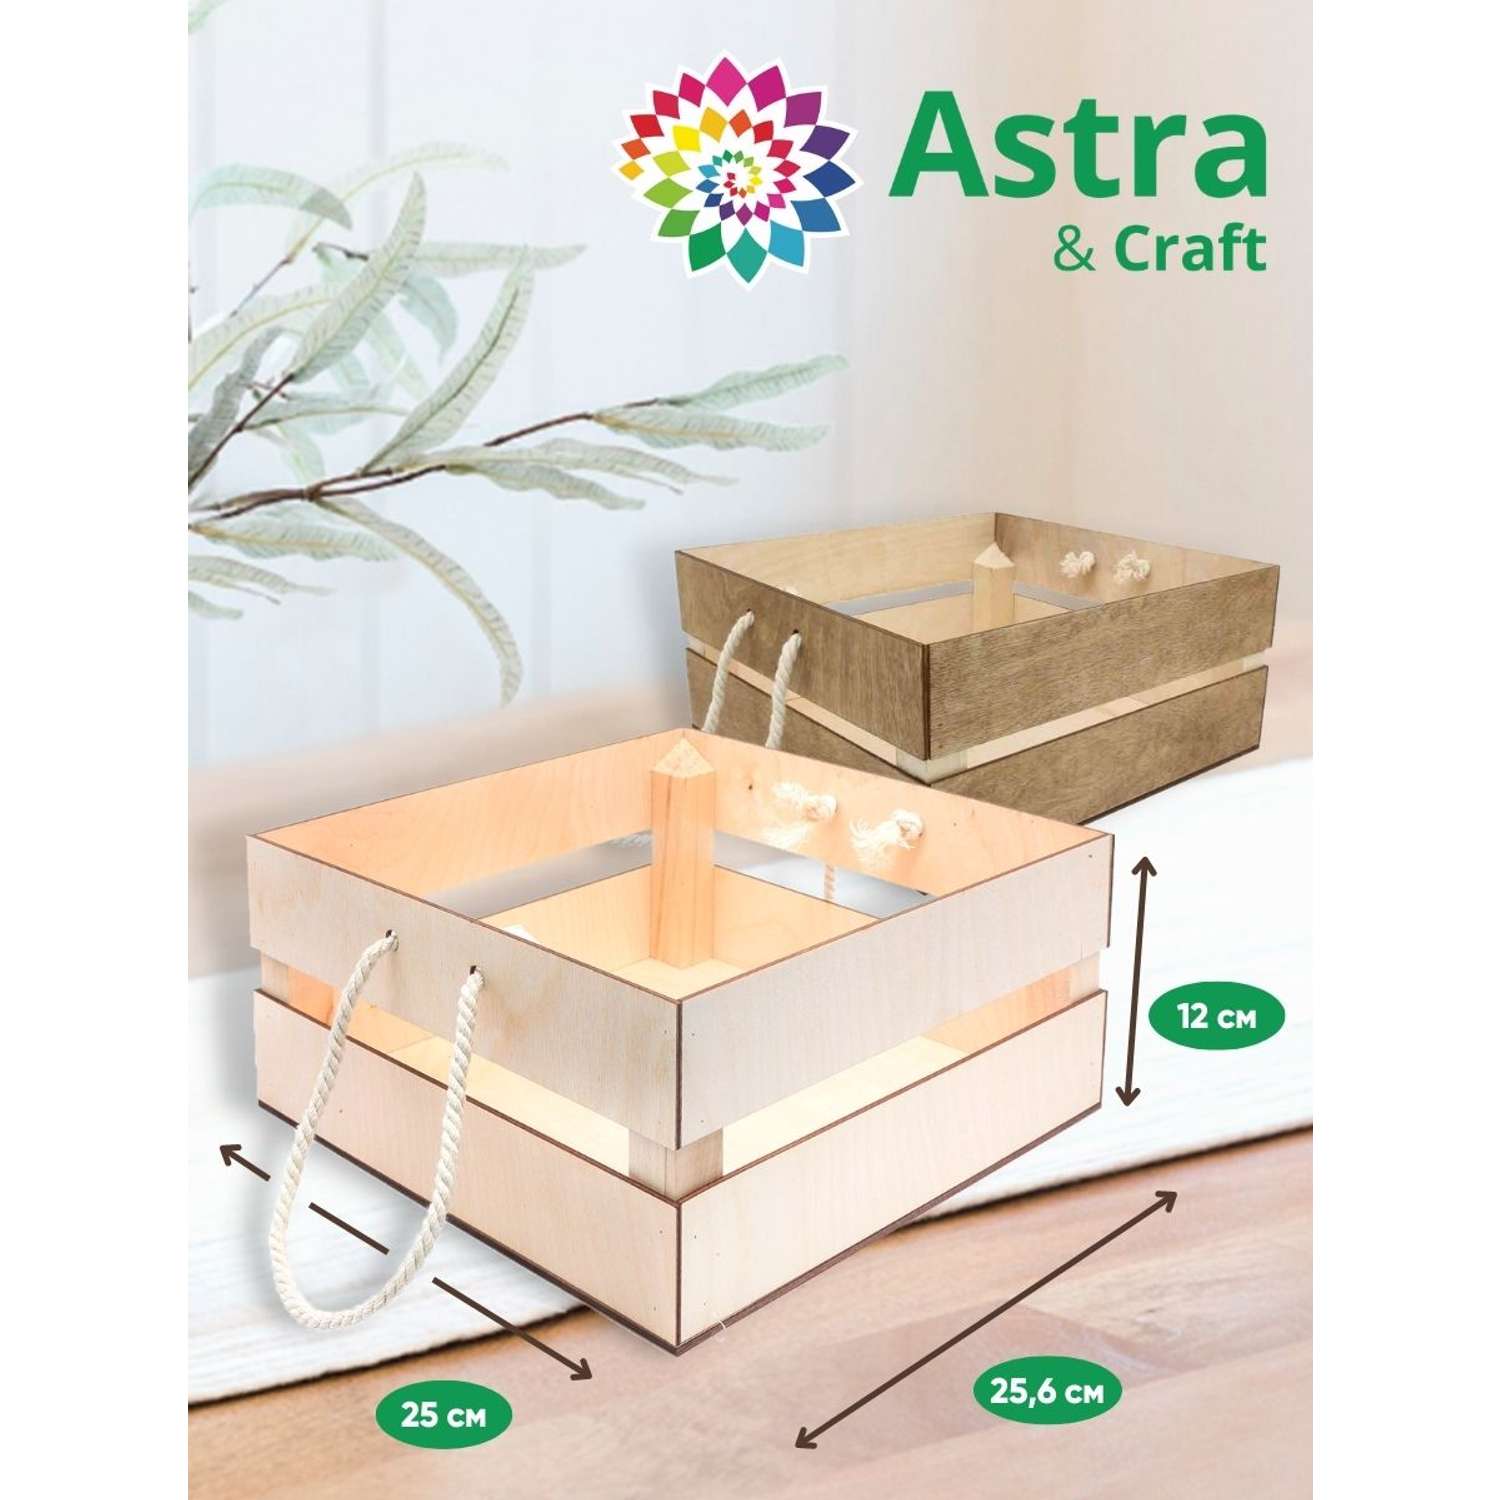 Кашпо Astra Craft с ручками для творчества рукоделия флористики 25.6х25х12 см дуб - фото 3